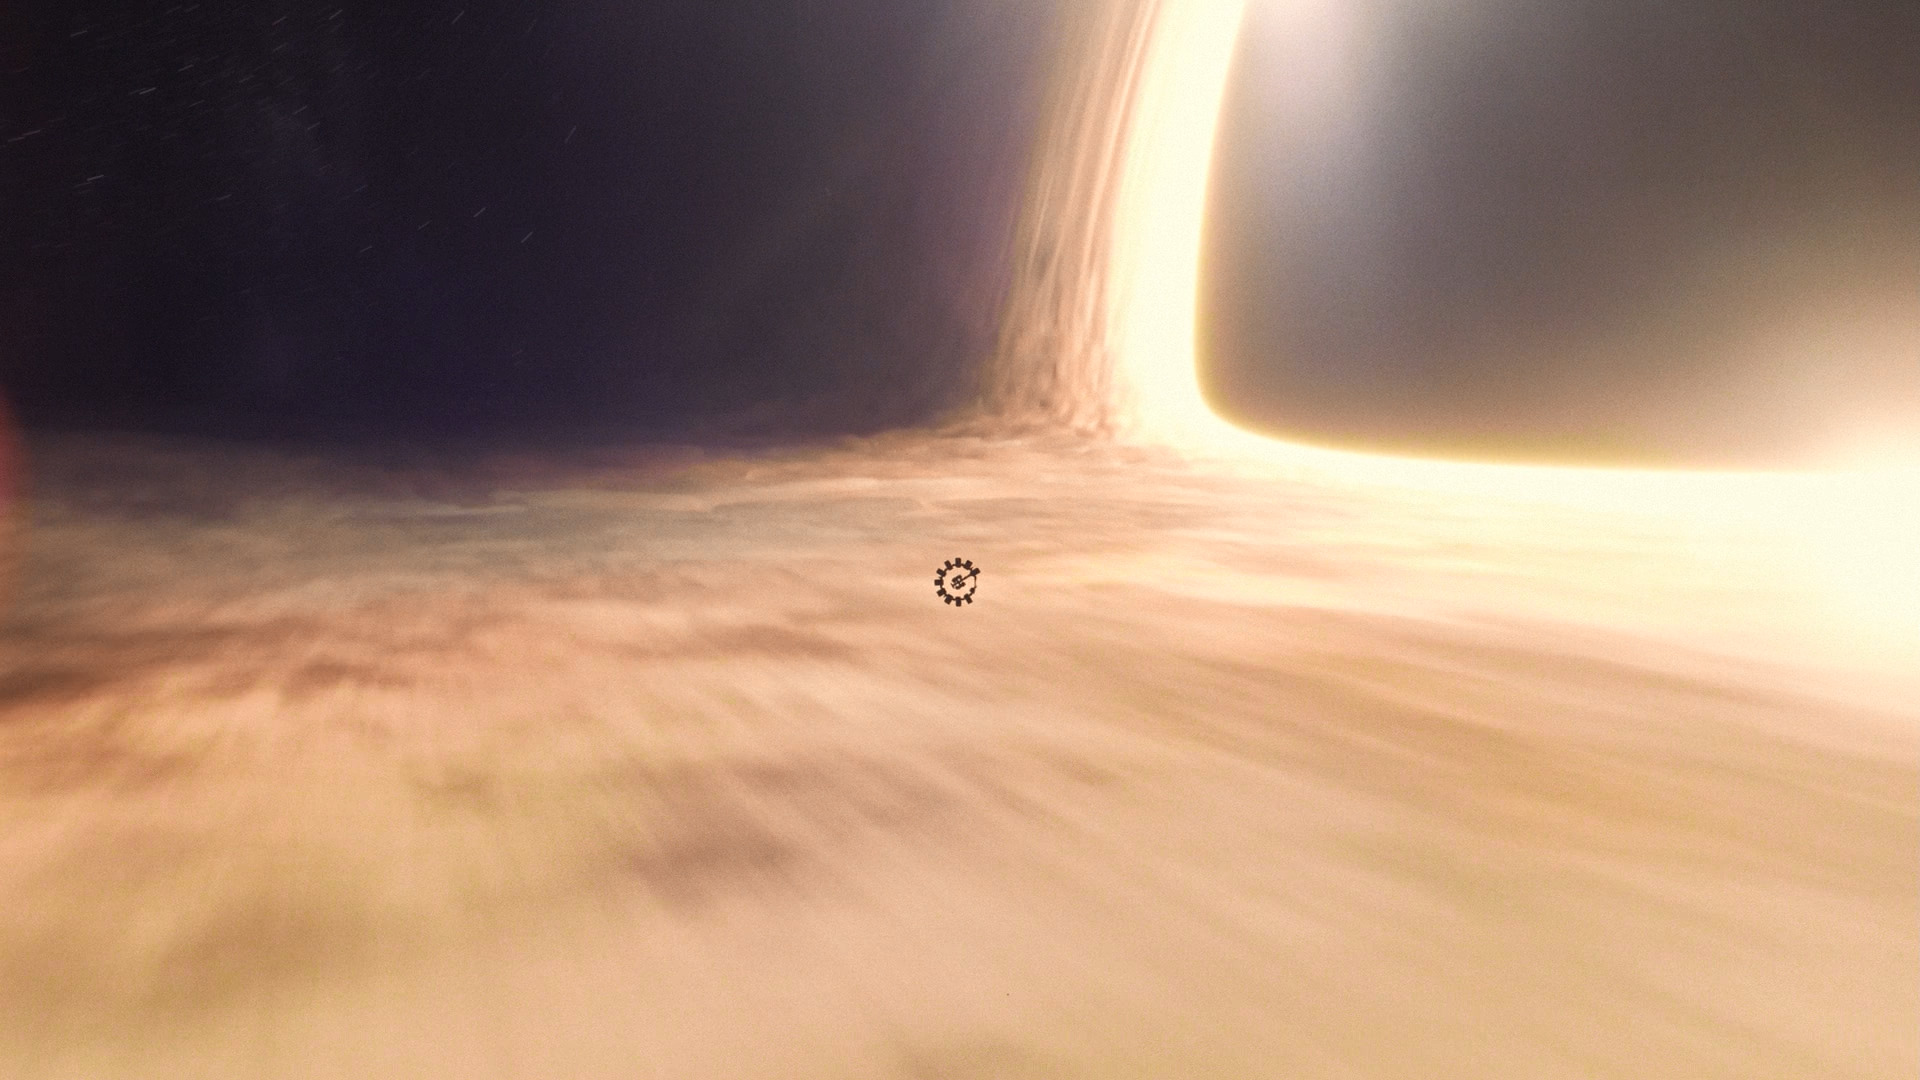 Interstellar (movie), Gargantua, Black Holes Wallpapers HD / Desktop